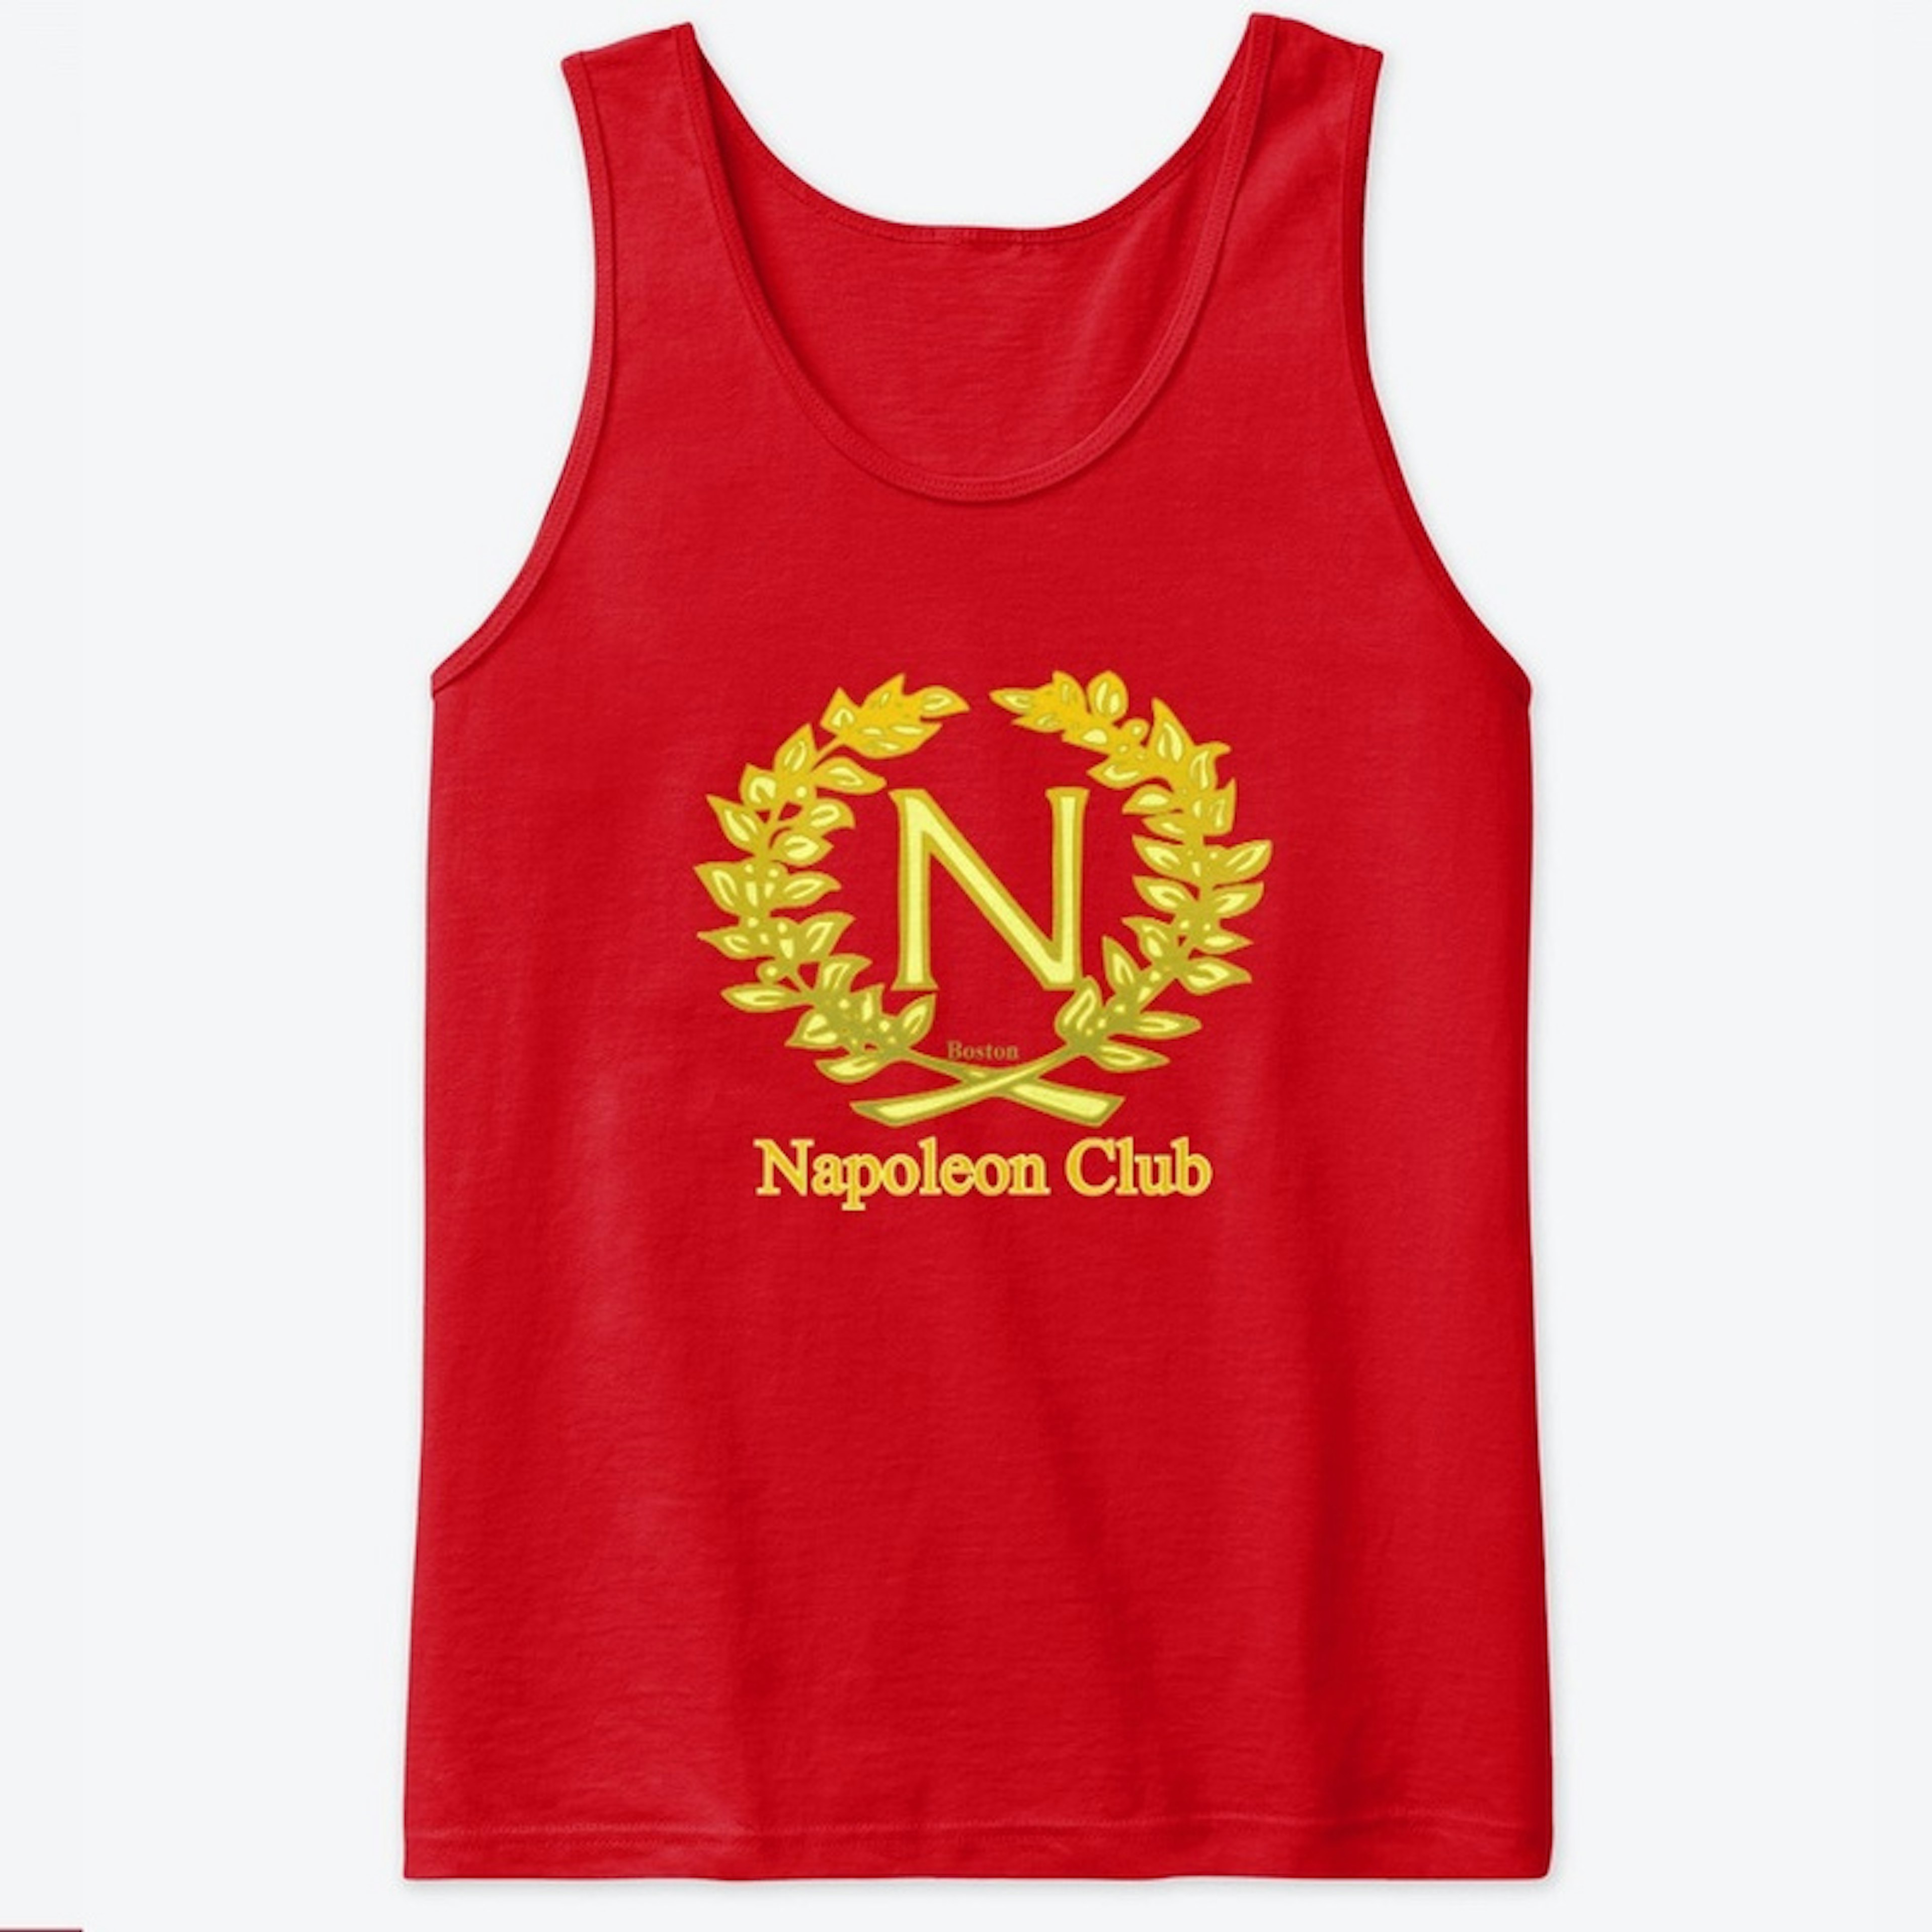 NapoleonClub